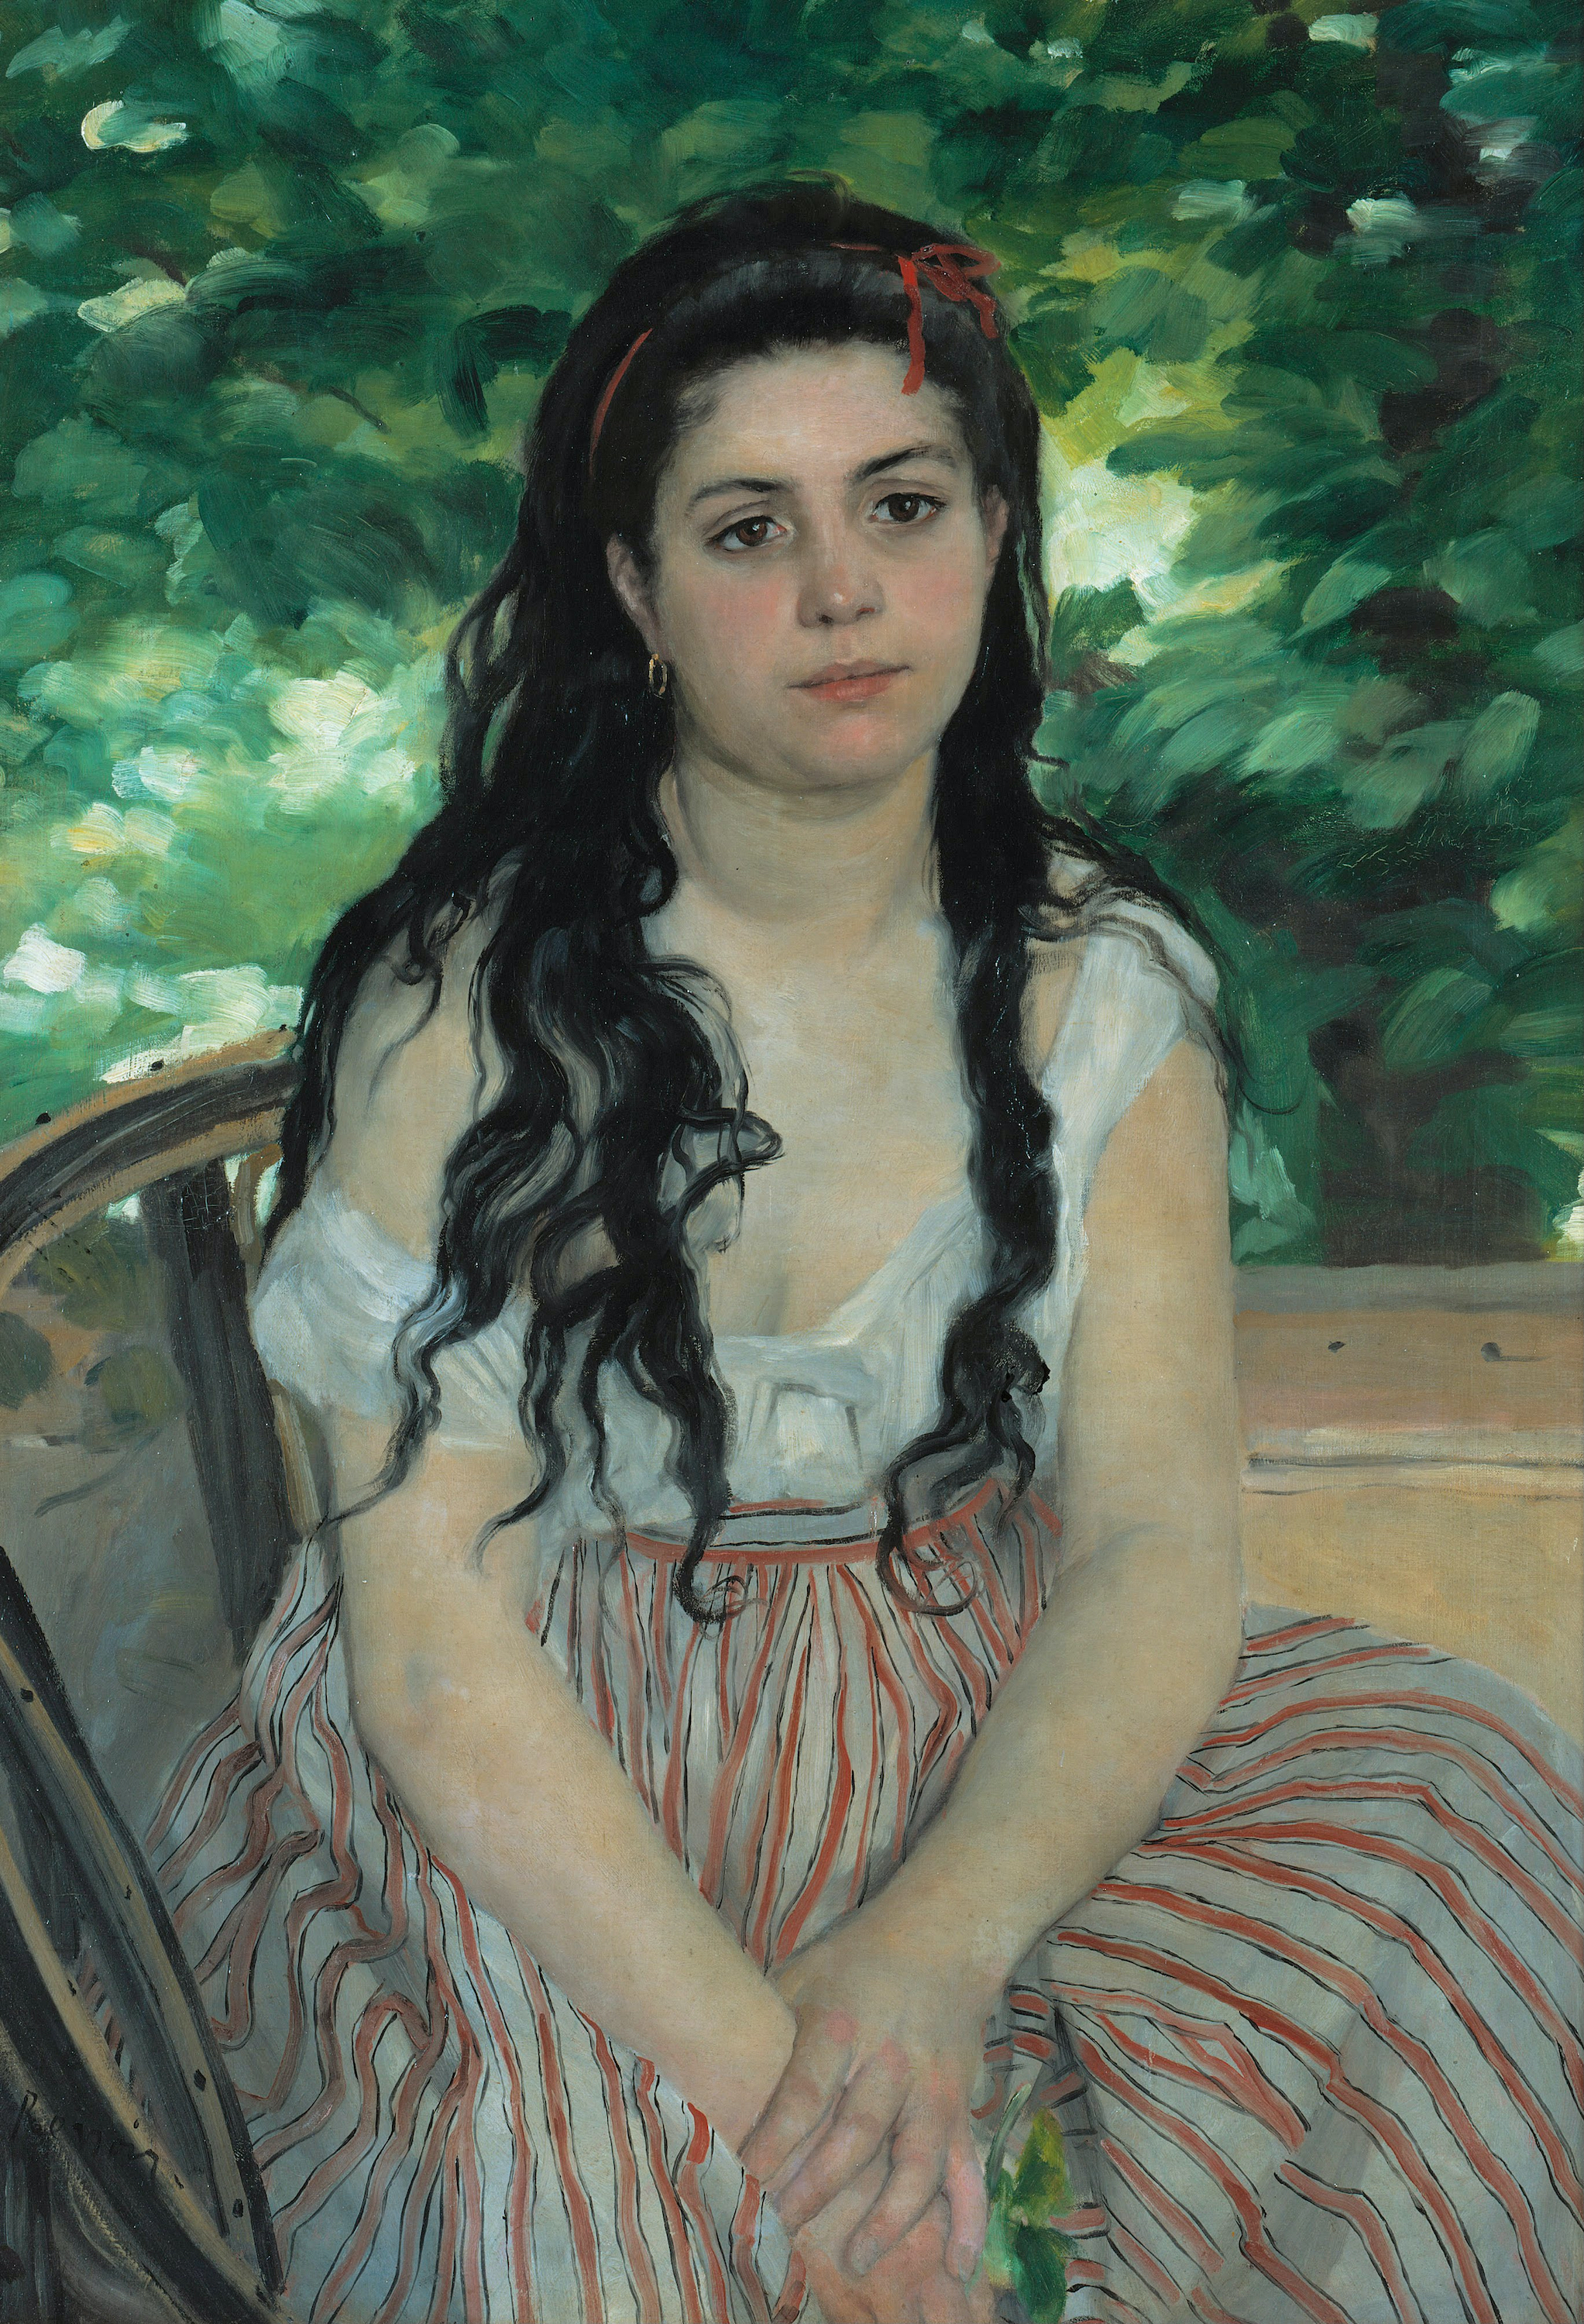 夏天 by Pierre-Auguste Renoir - 1868 - 59 x 85 cm 